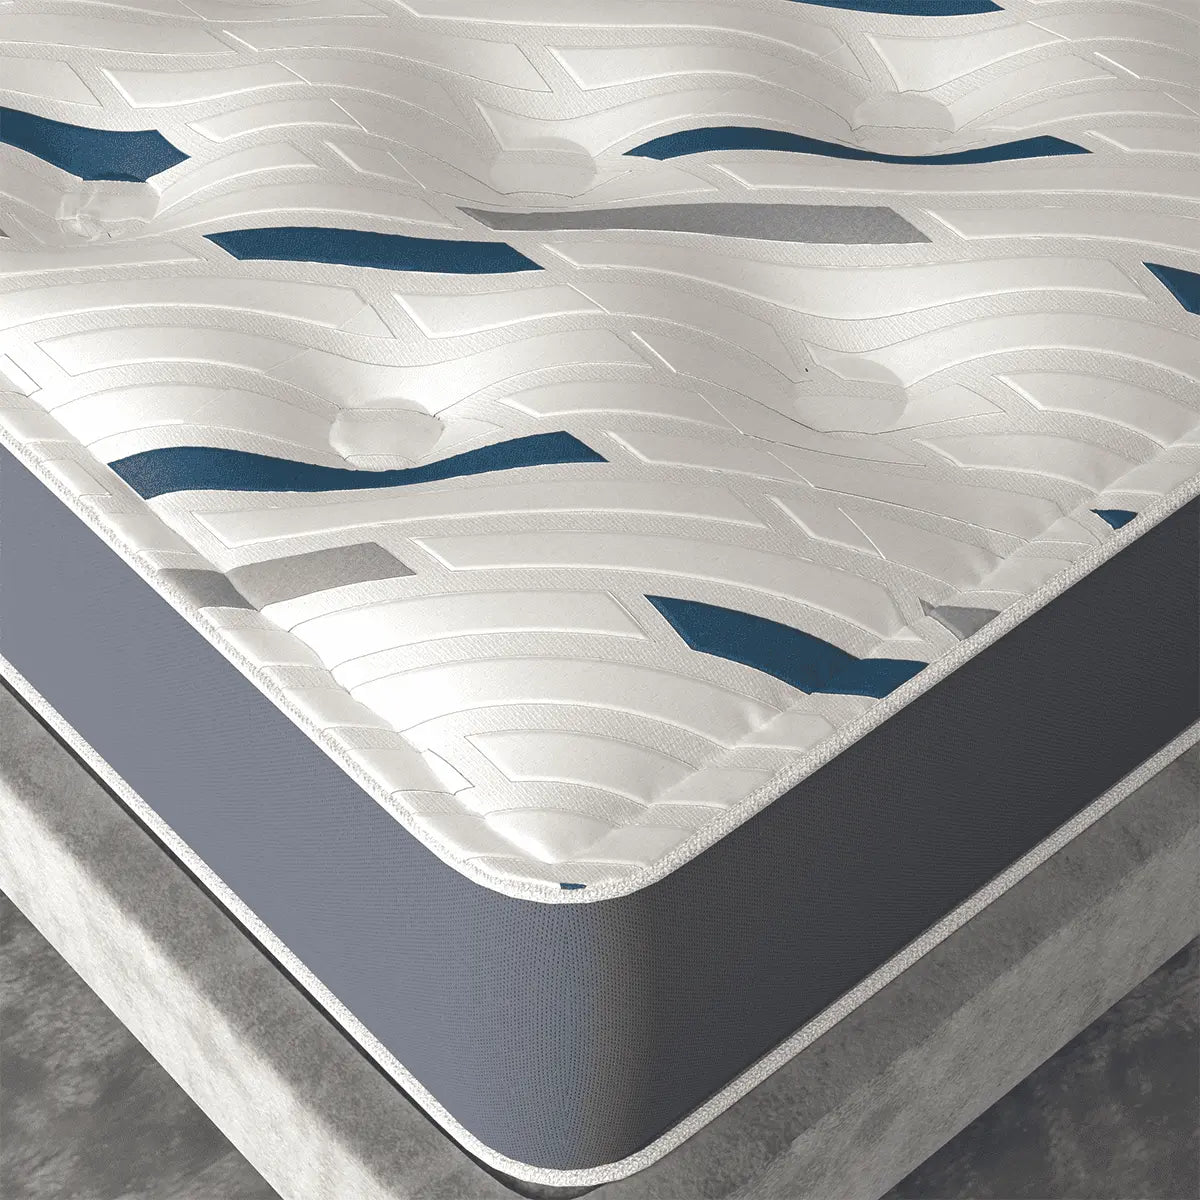 bodiform gel tight top mattress by englander - close view